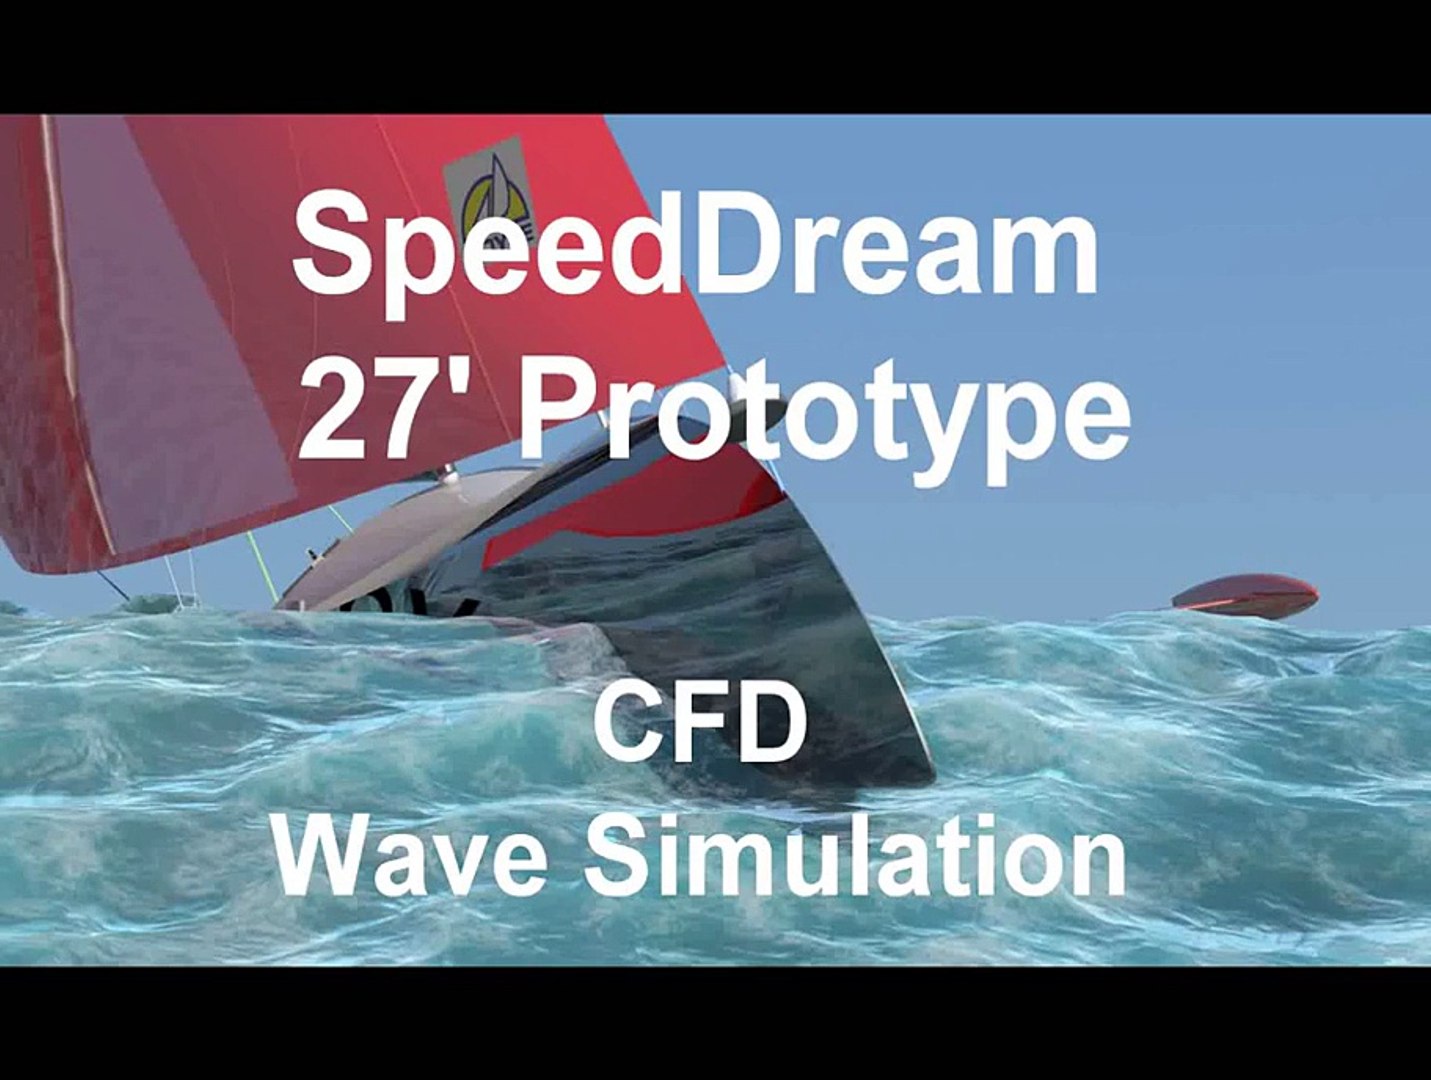 SpeedDream Wave Simulation